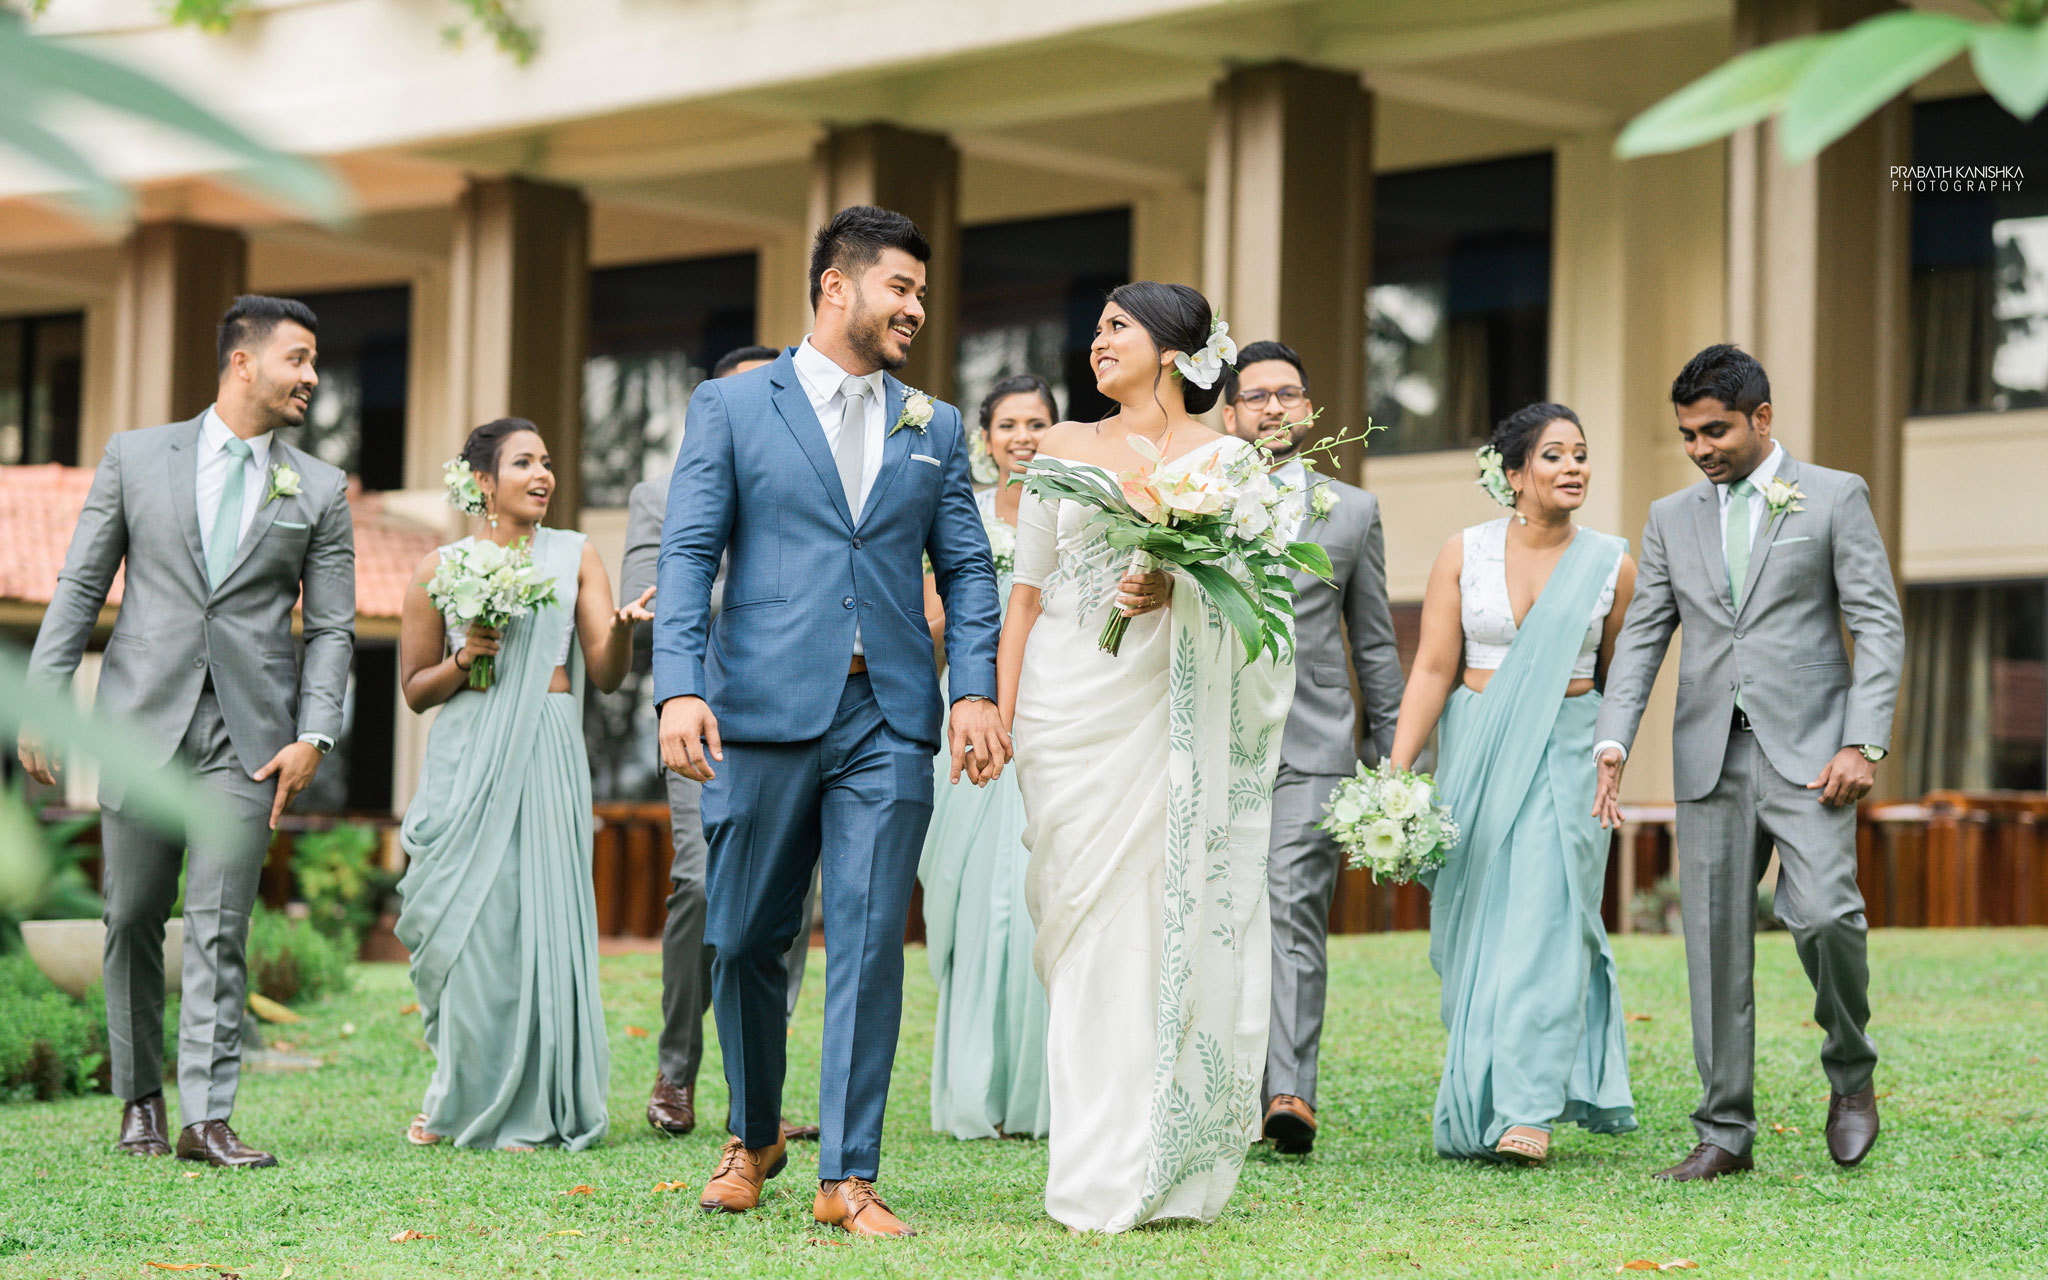 Nishadi & Haren - Prabath Kanishka Wedding Photography